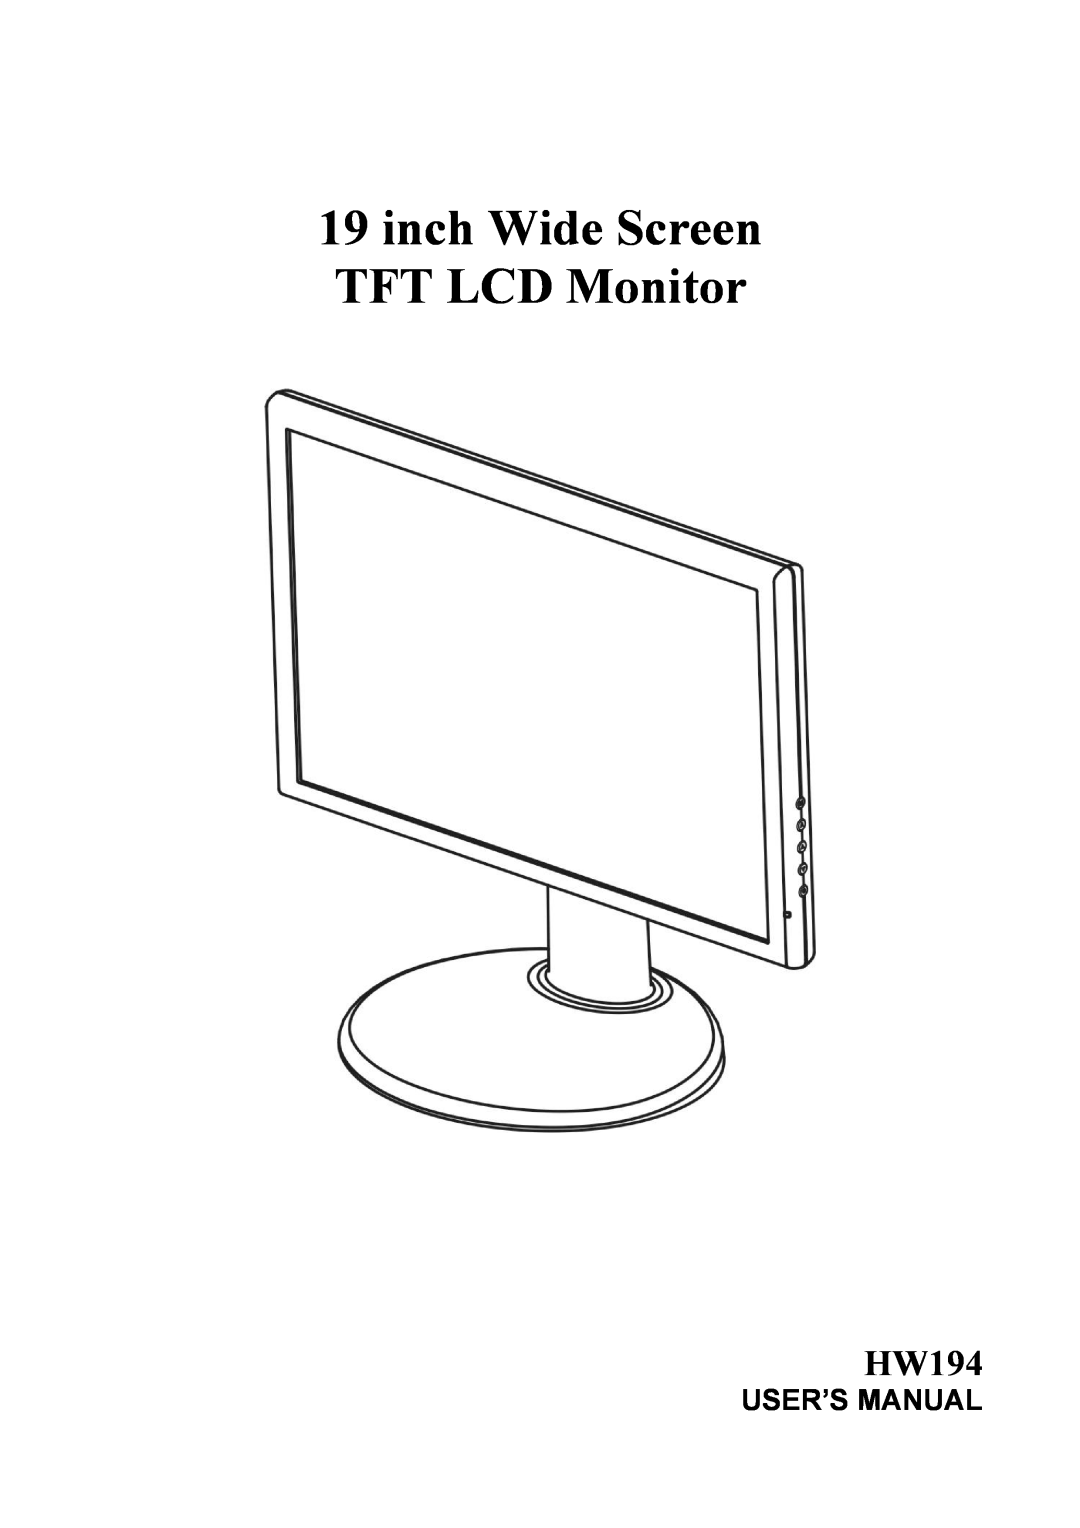 Compaq HW194 user manual User’S Manual, inch Wide Screen TFT LCD Monitor 